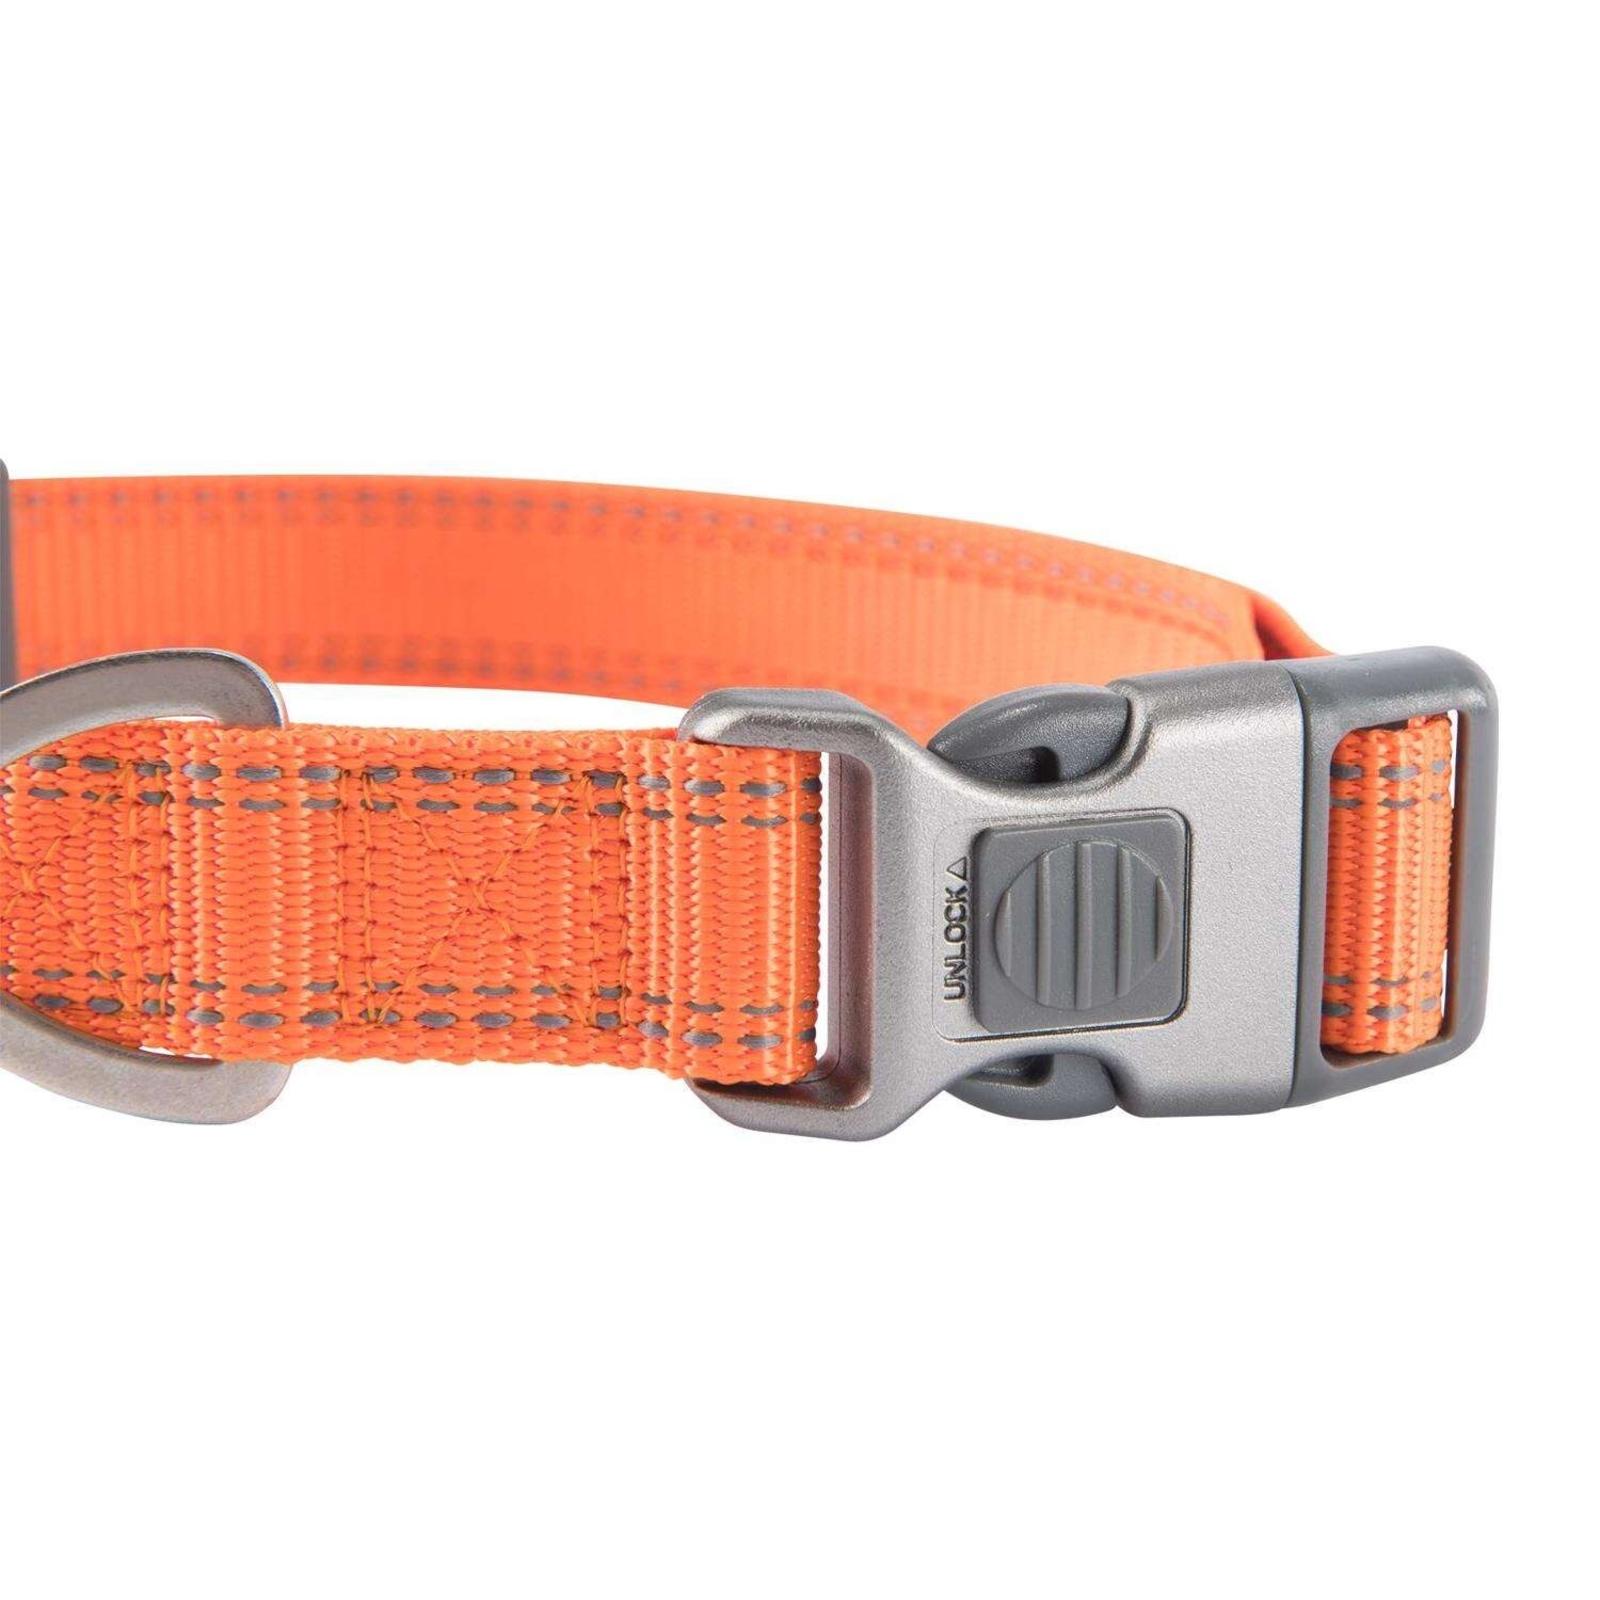 Browning Safety Orange Nylon Dog Collar Small